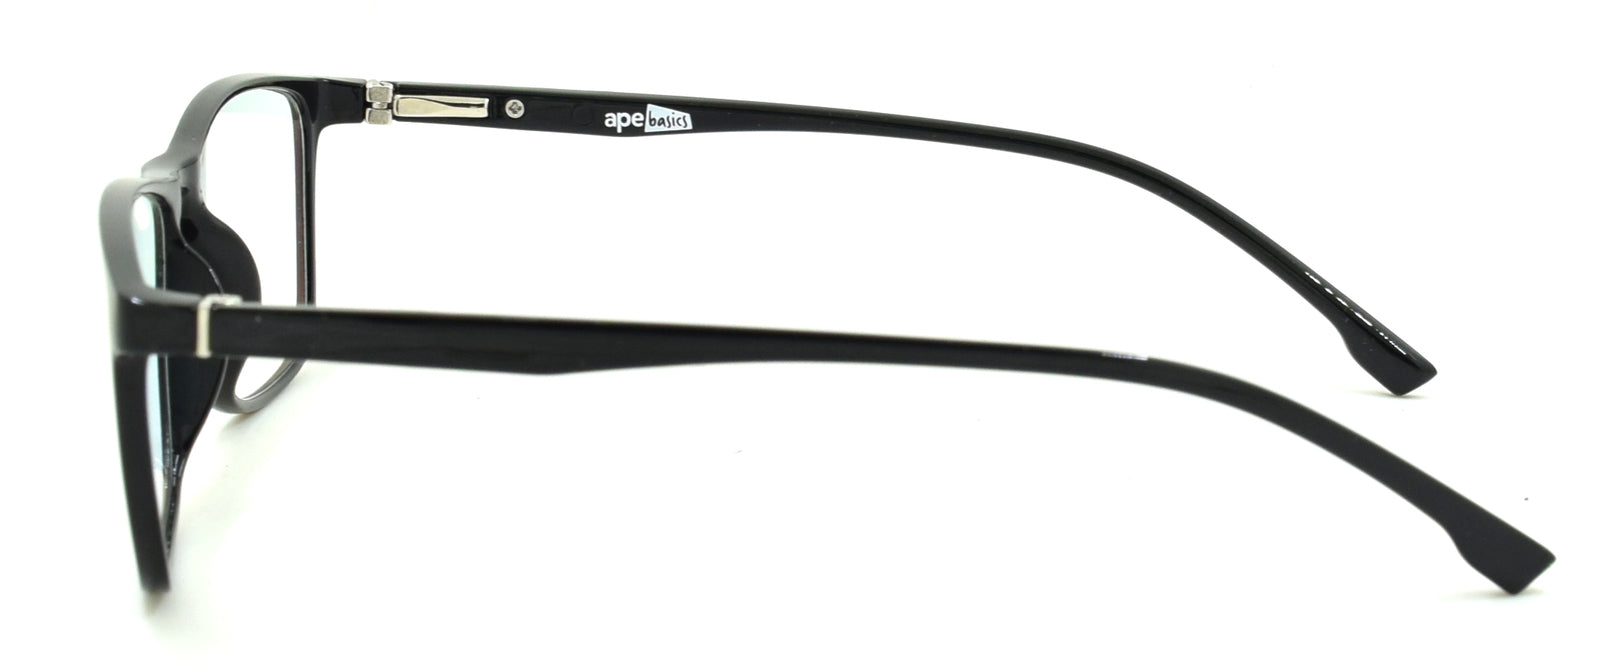 Ape Basics Computer Anti-Bluelight Glasses 35%